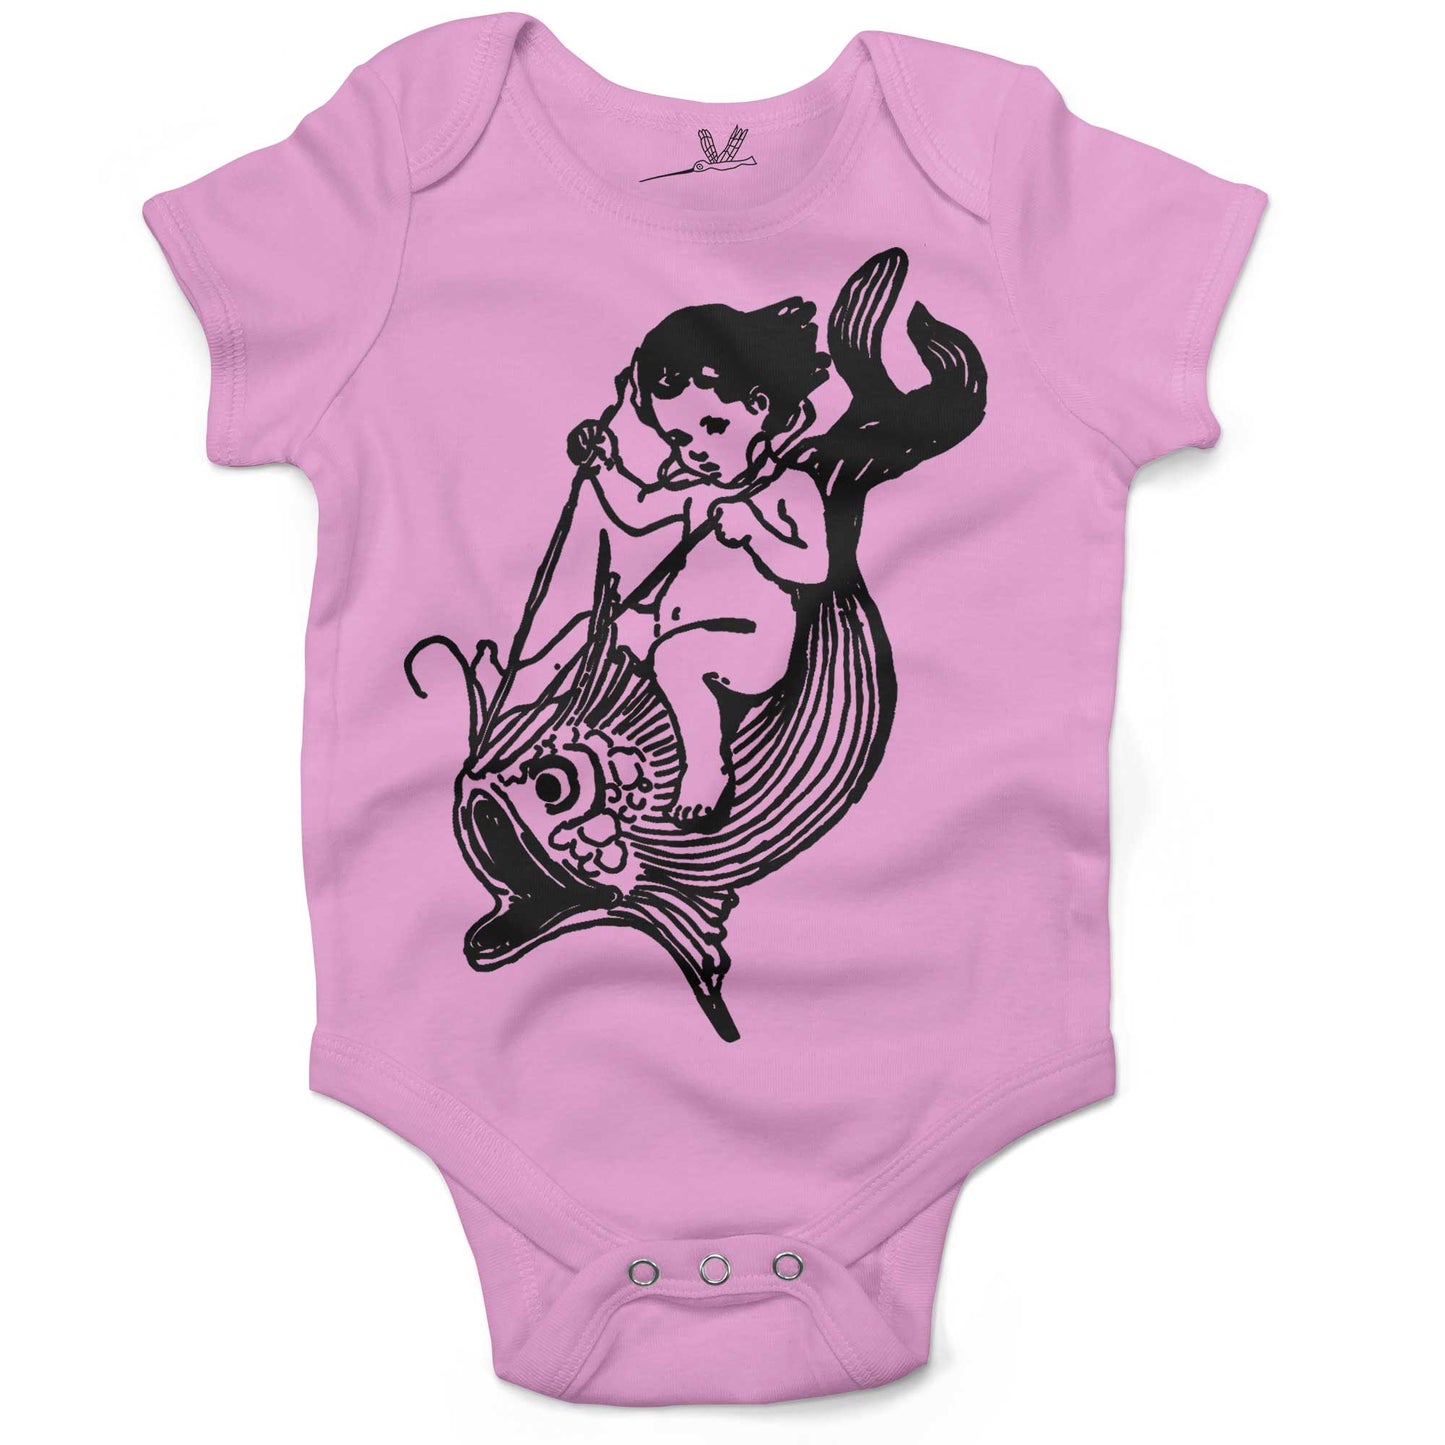 Water Baby Riding A Giant Fish Infant Bodysuit or Raglan Tee-Organic Pink-3-6 months